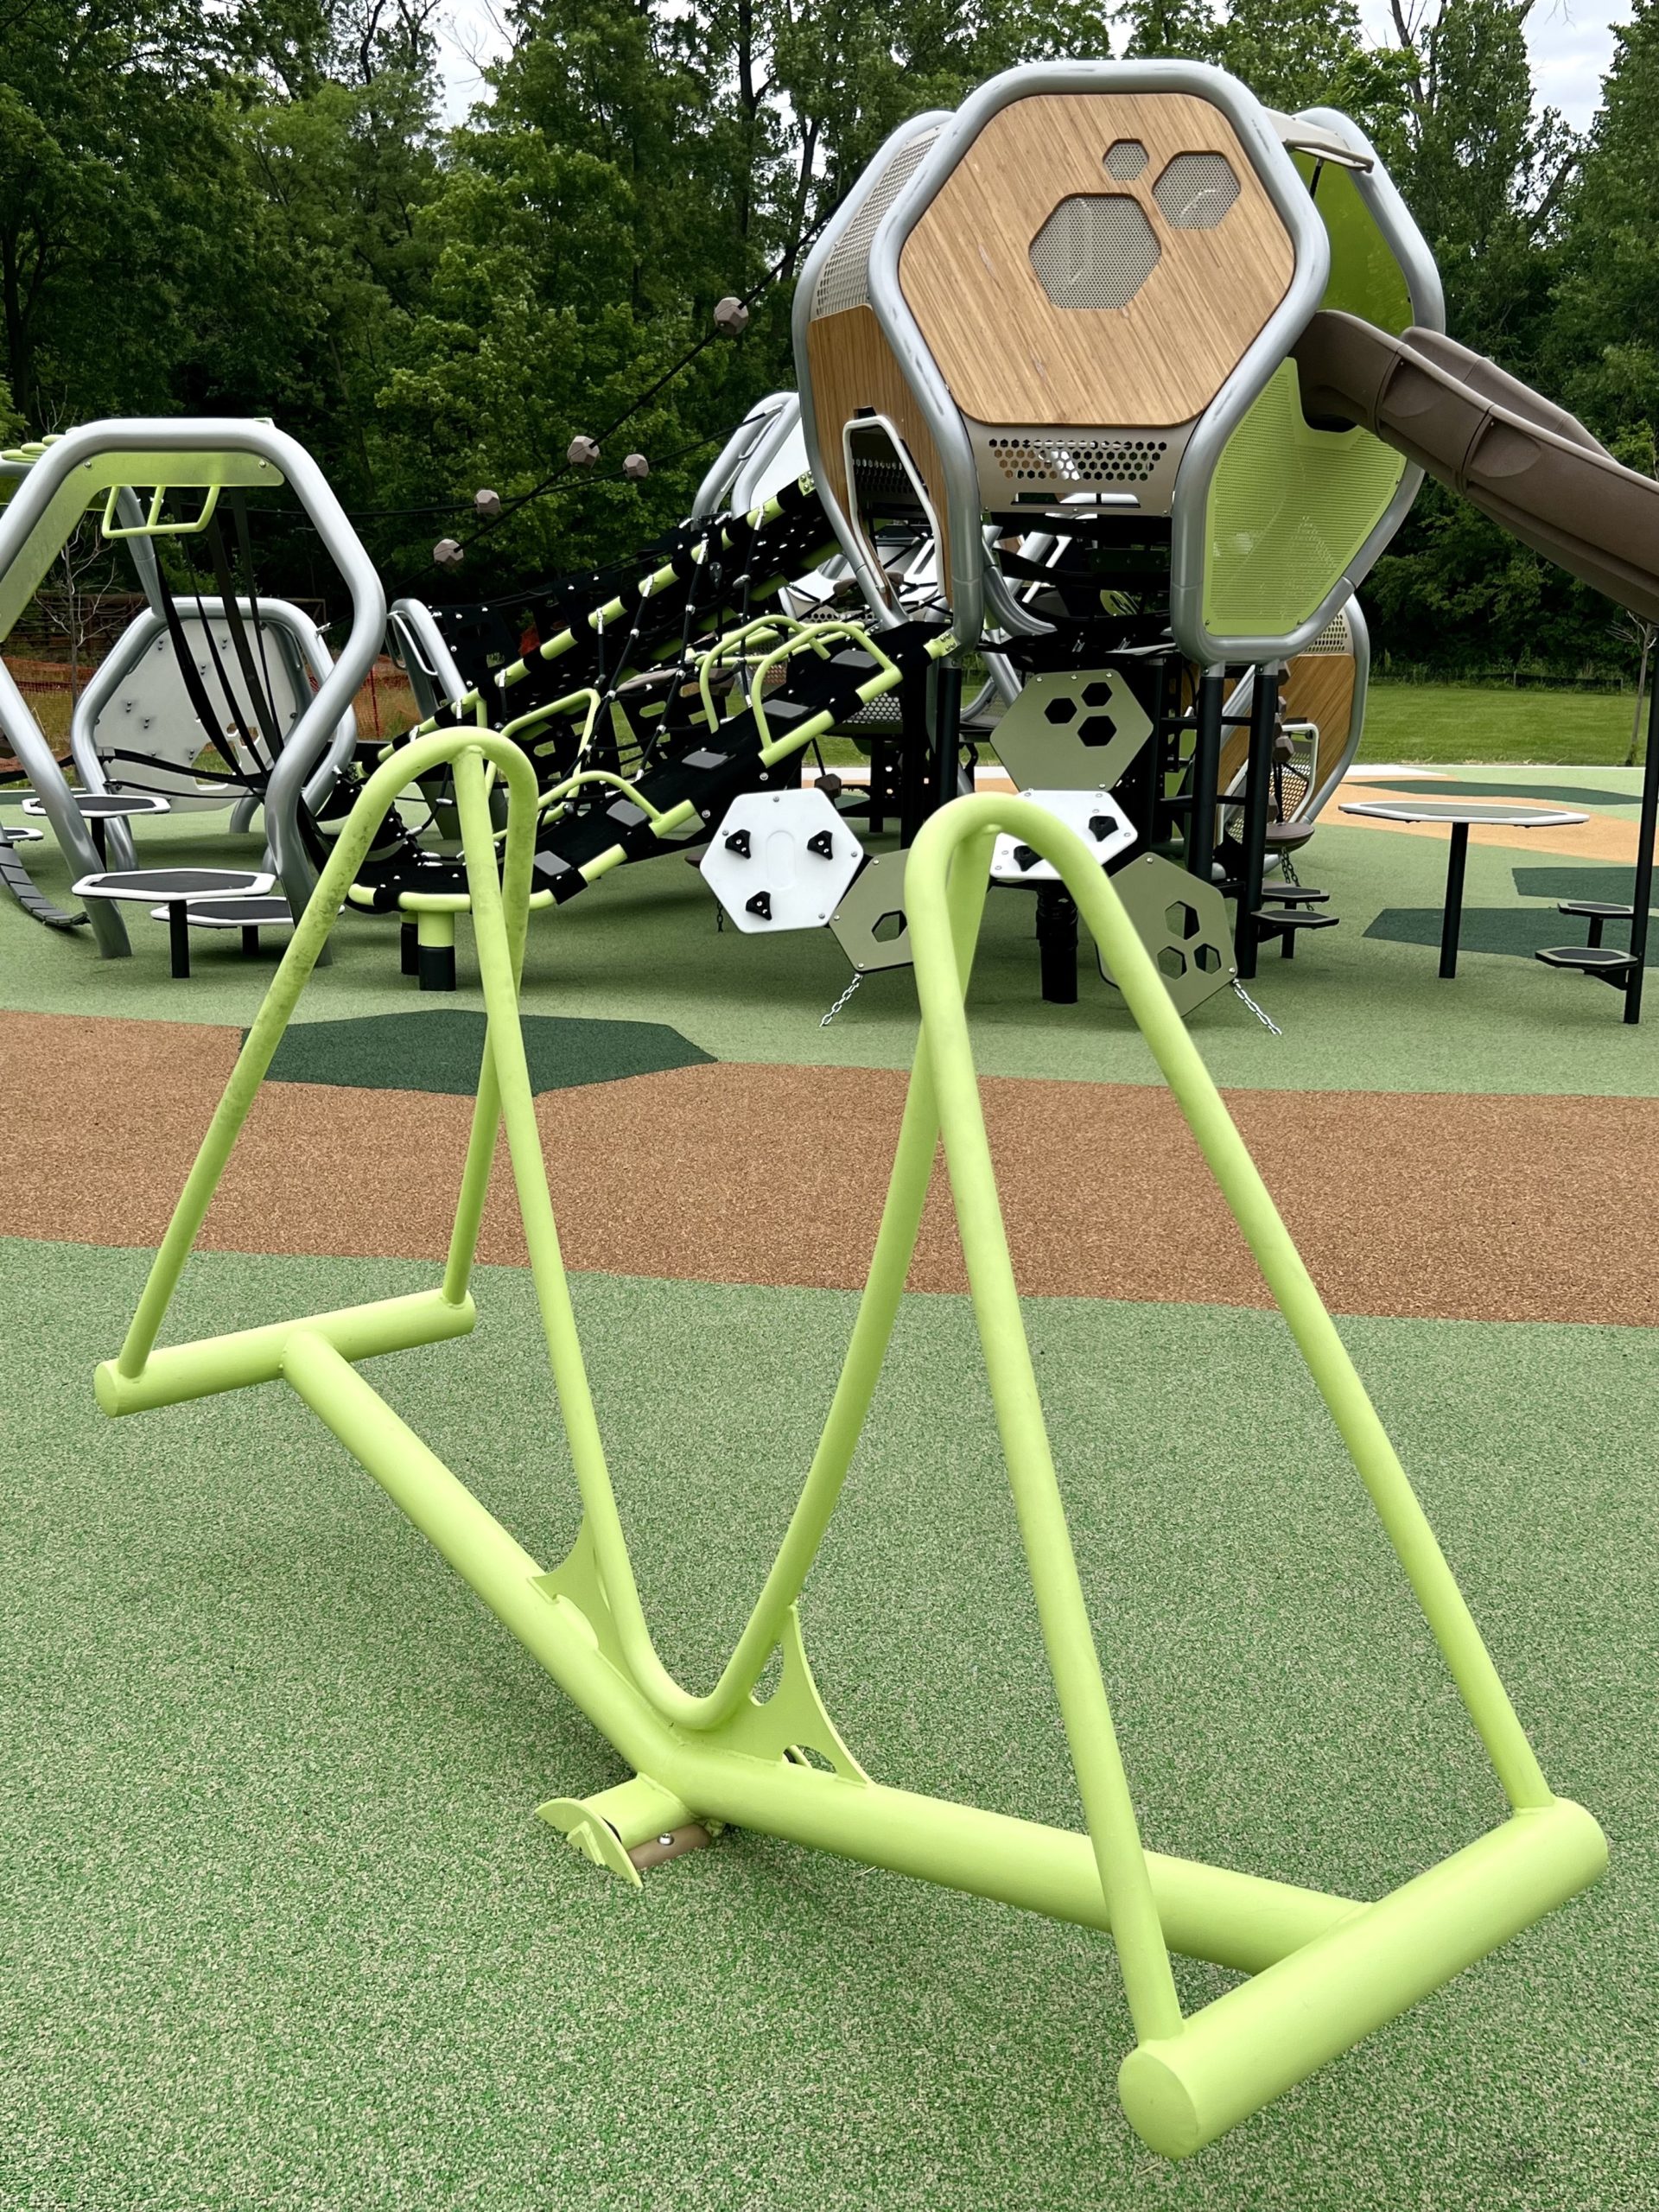 Meadowlark park playground equipment teeter totter